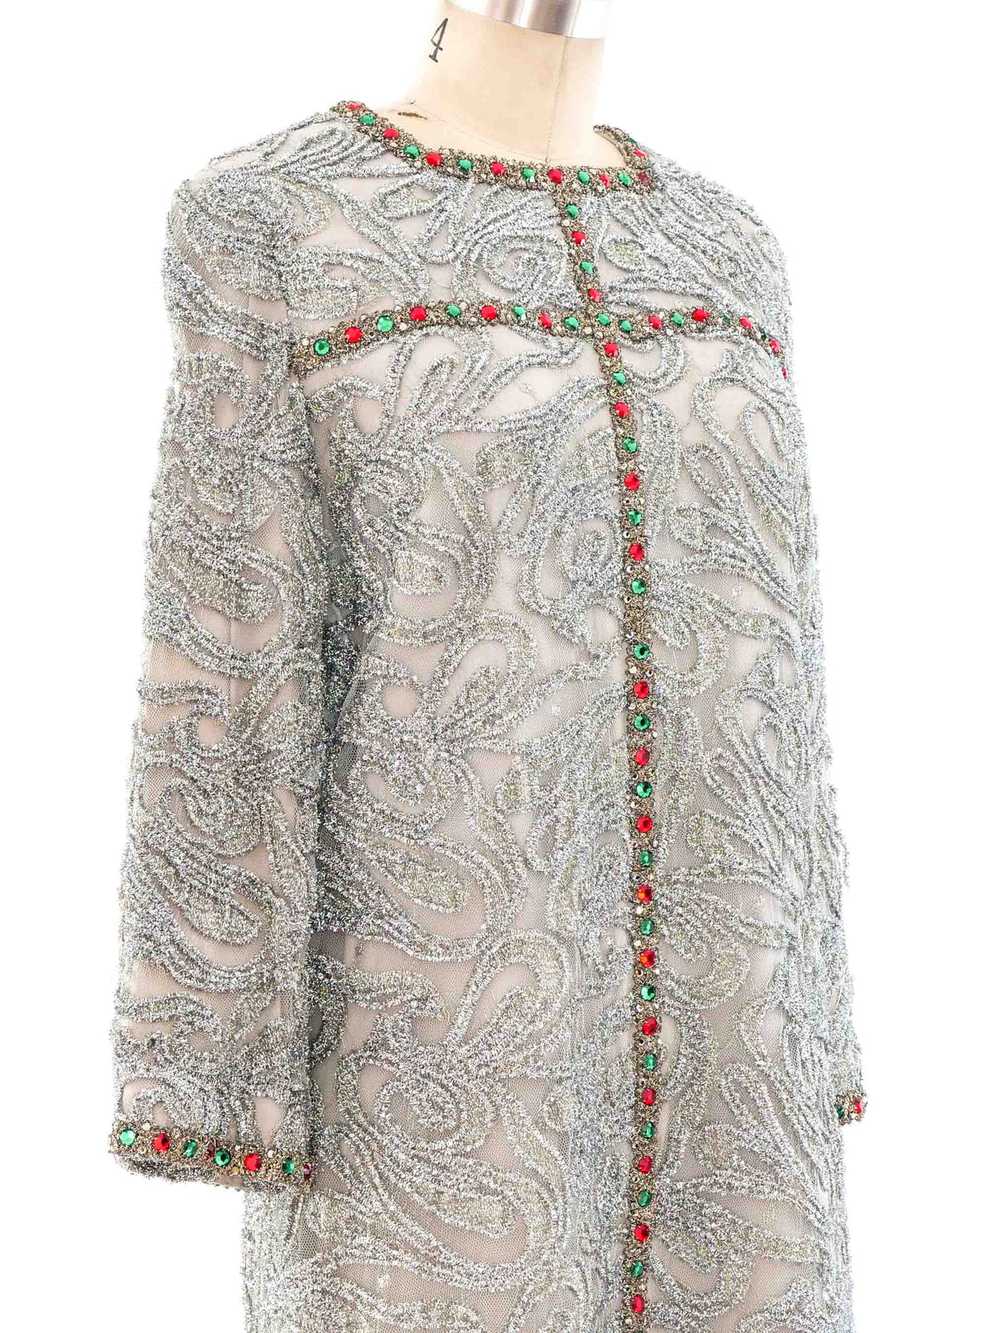 Bill Blass Tinsel and Crystal Embellished Dress - image 4